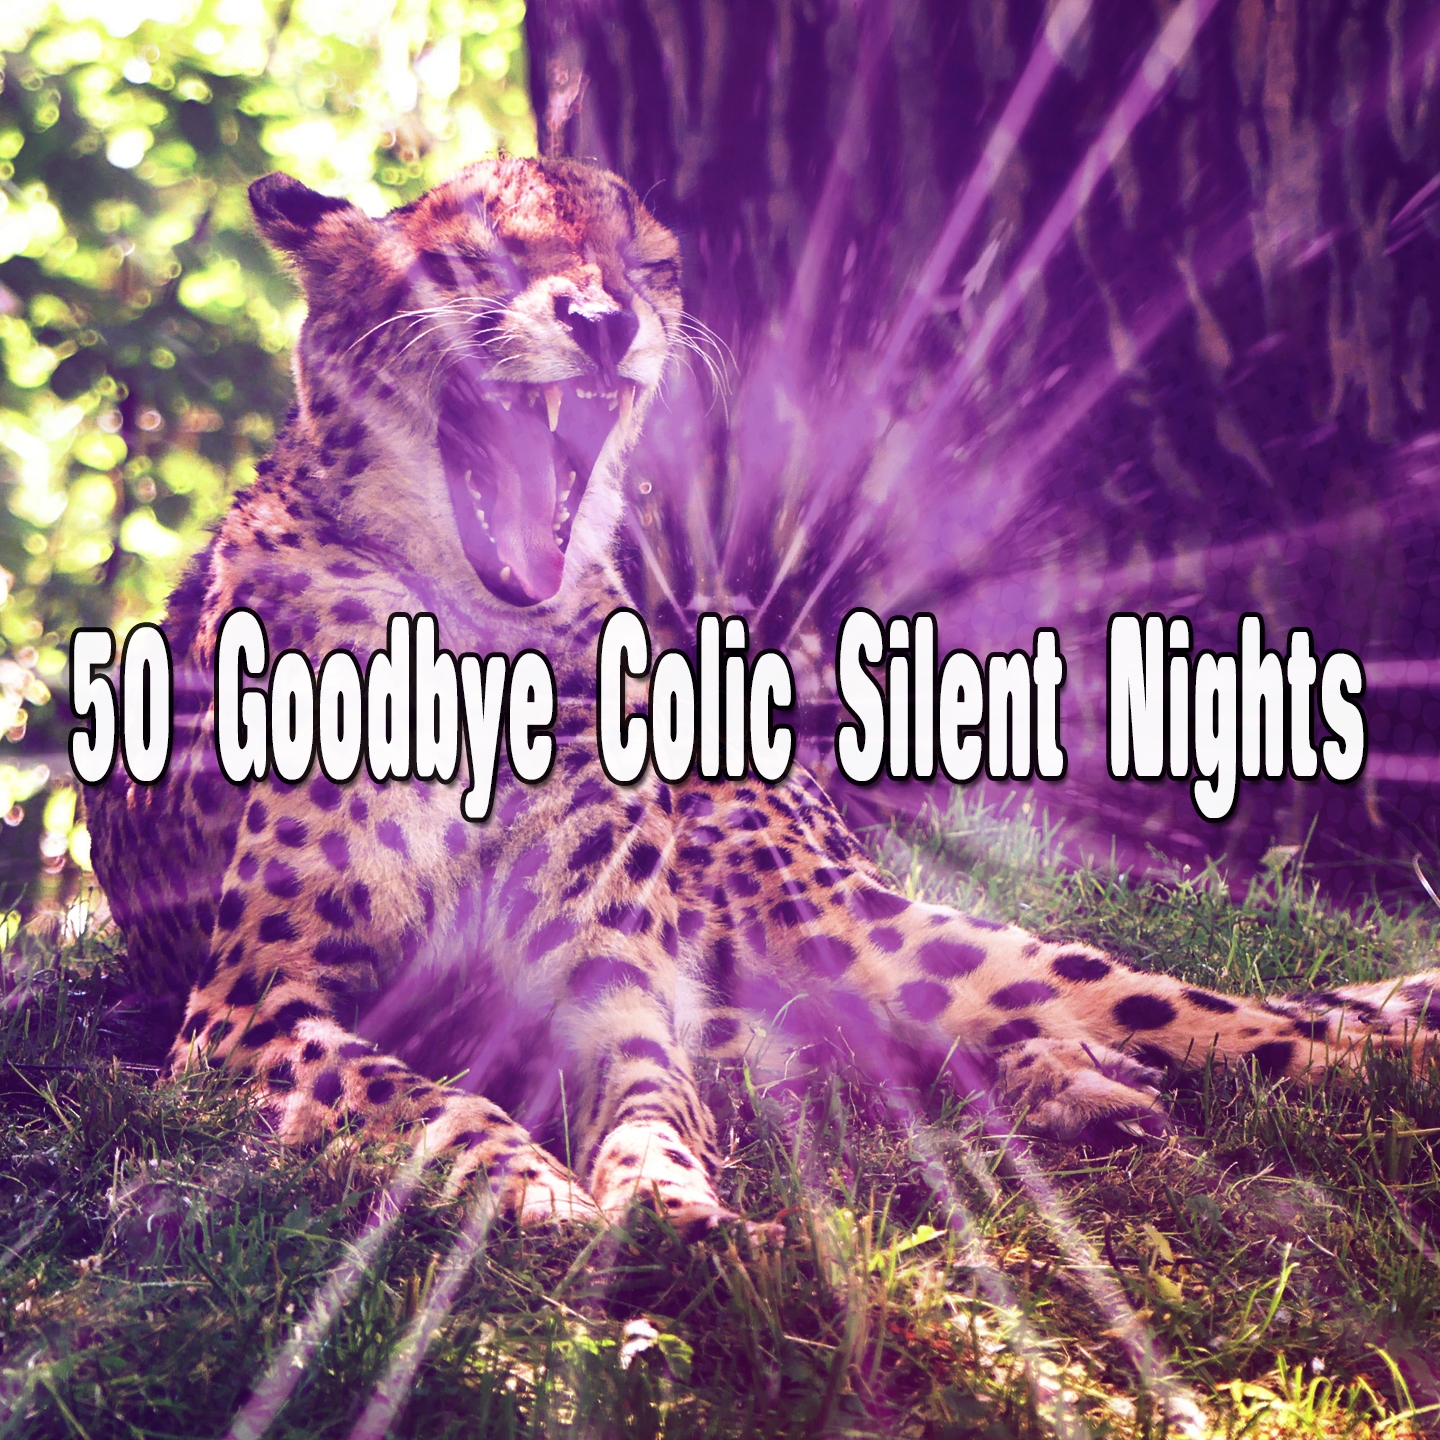 50 Goodbye Colic Silent Nights